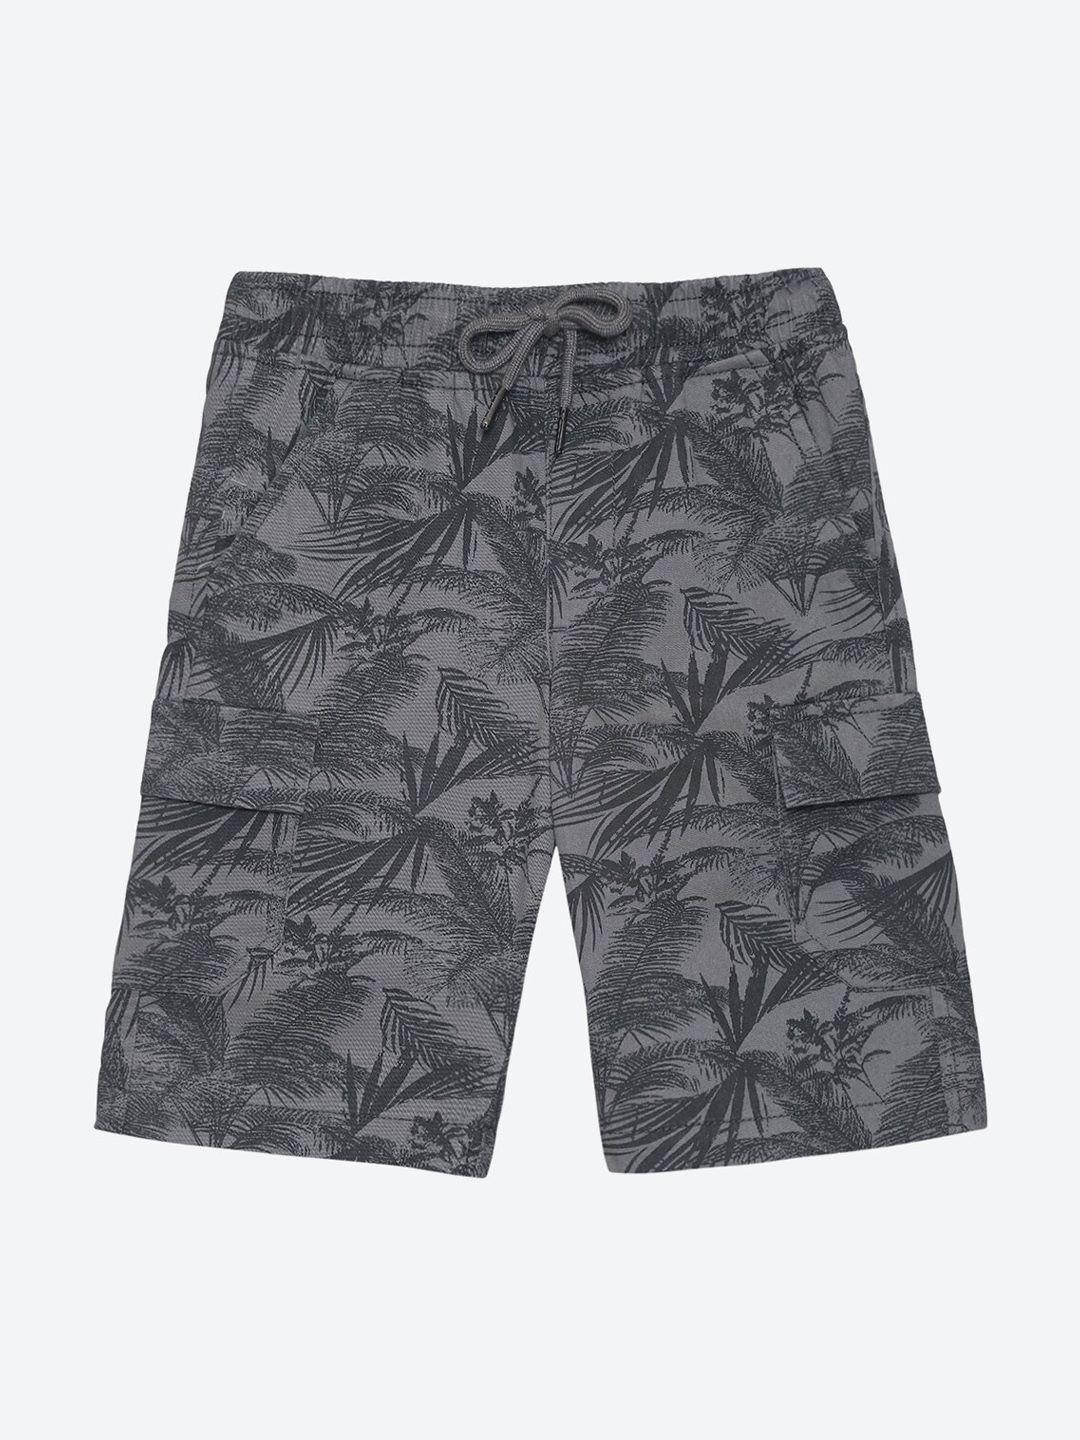 2bme boys tropical printed cotton shorts